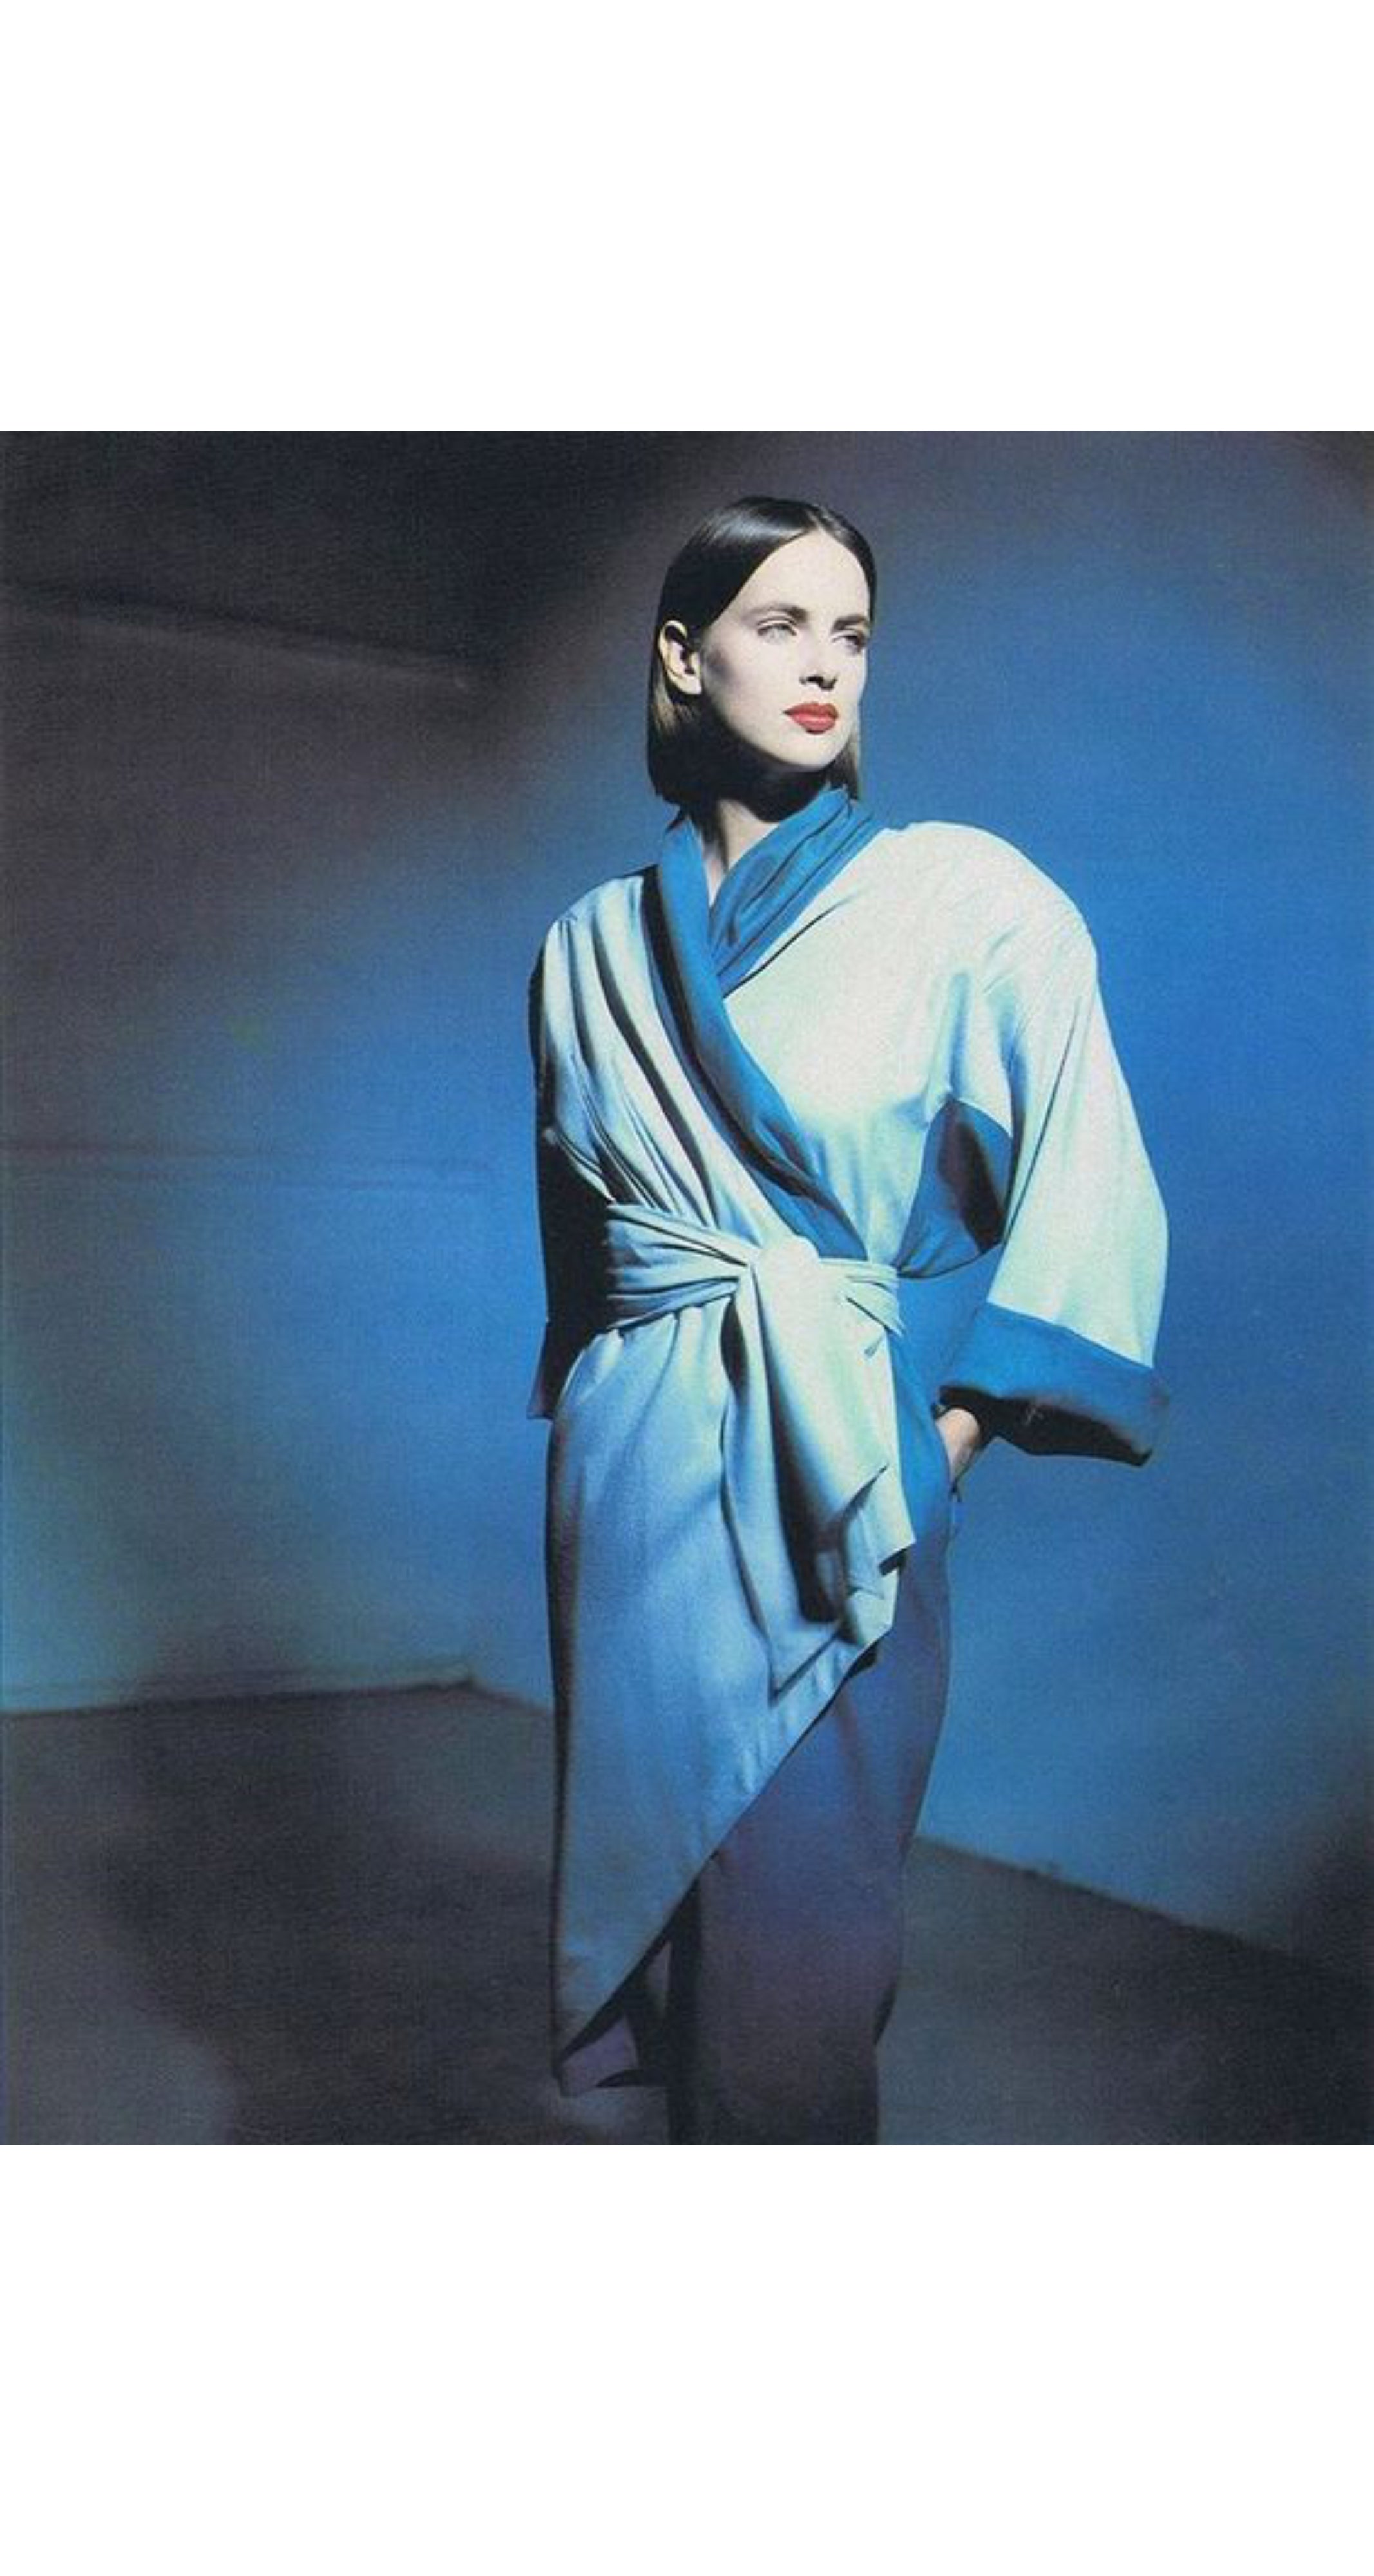 1984-85 F/W Two-Tone Blue Wool Wrap Dress